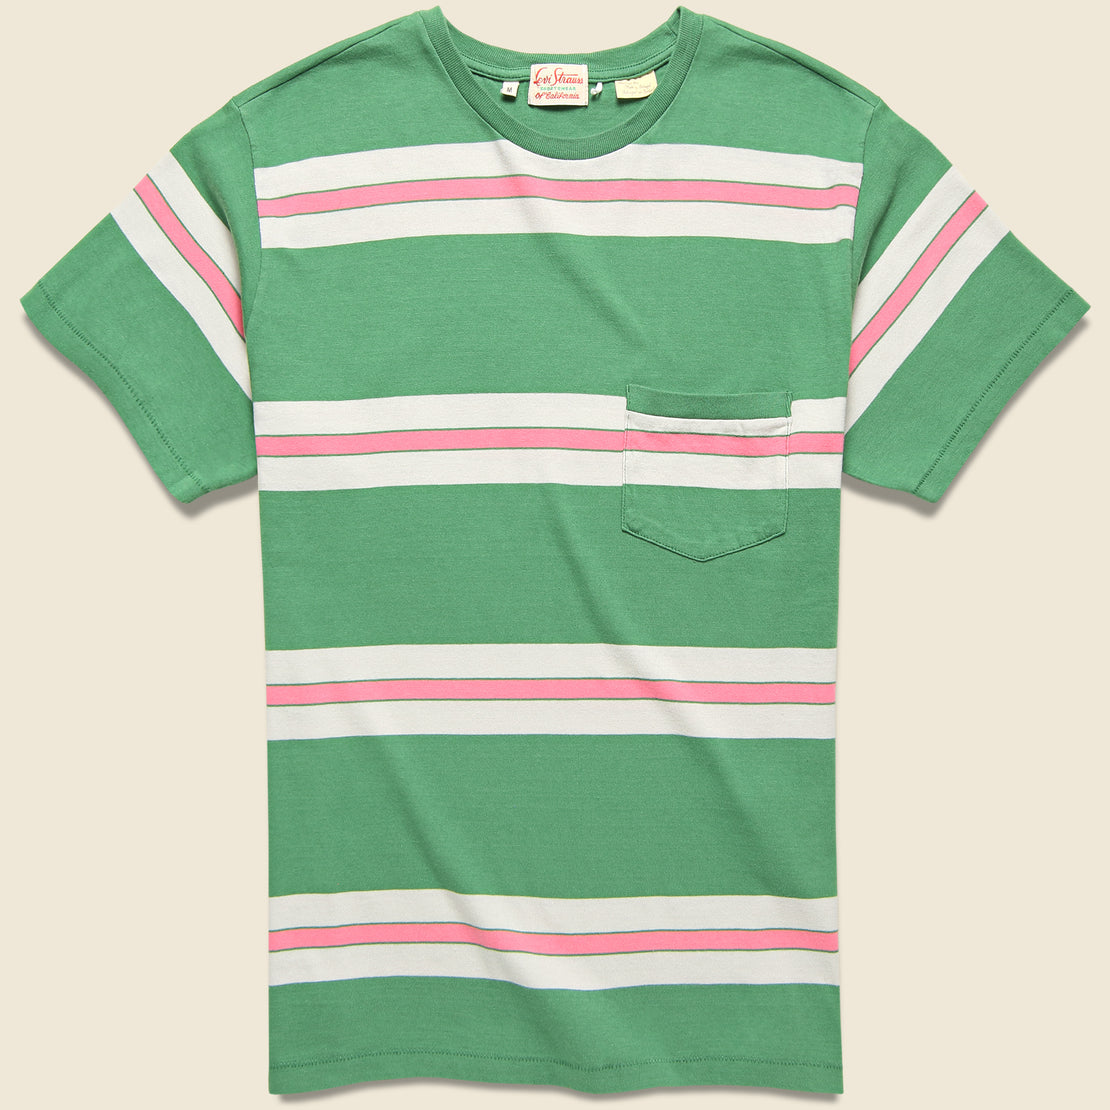 Levis Vintage Clothing 1940s Split Hem Tee - Watermelon Pink/Green/Cream